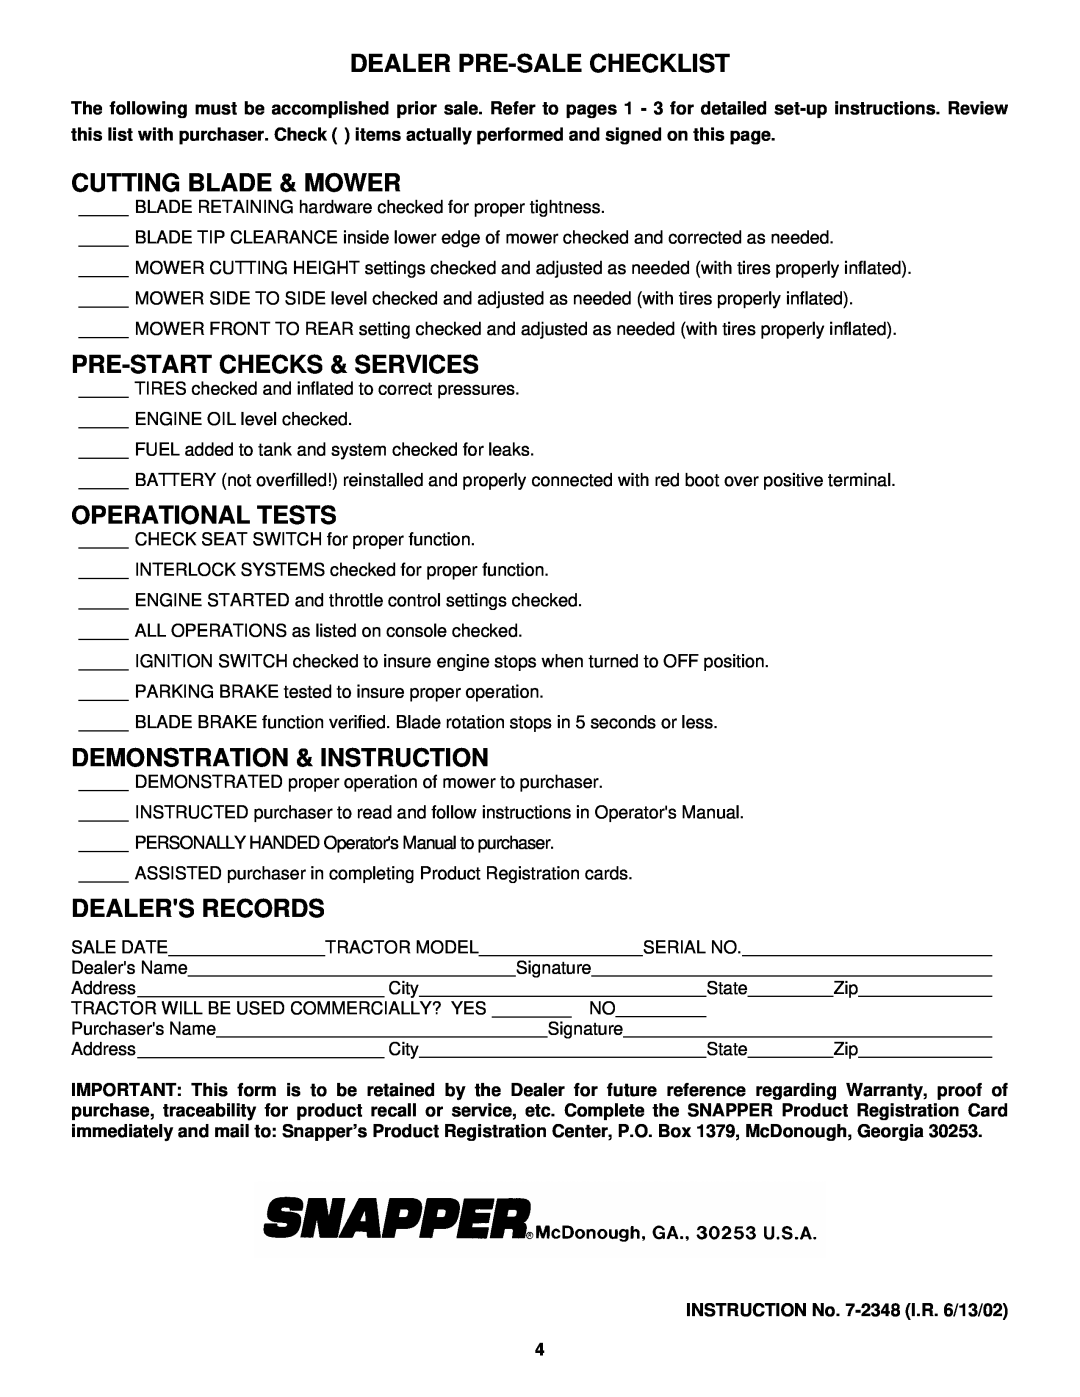 Snapper LT Series manual Dealer Pre-Salechecklist, Cutting Blade & Mower, Pre-Startchecks & Services, Operational Tests 